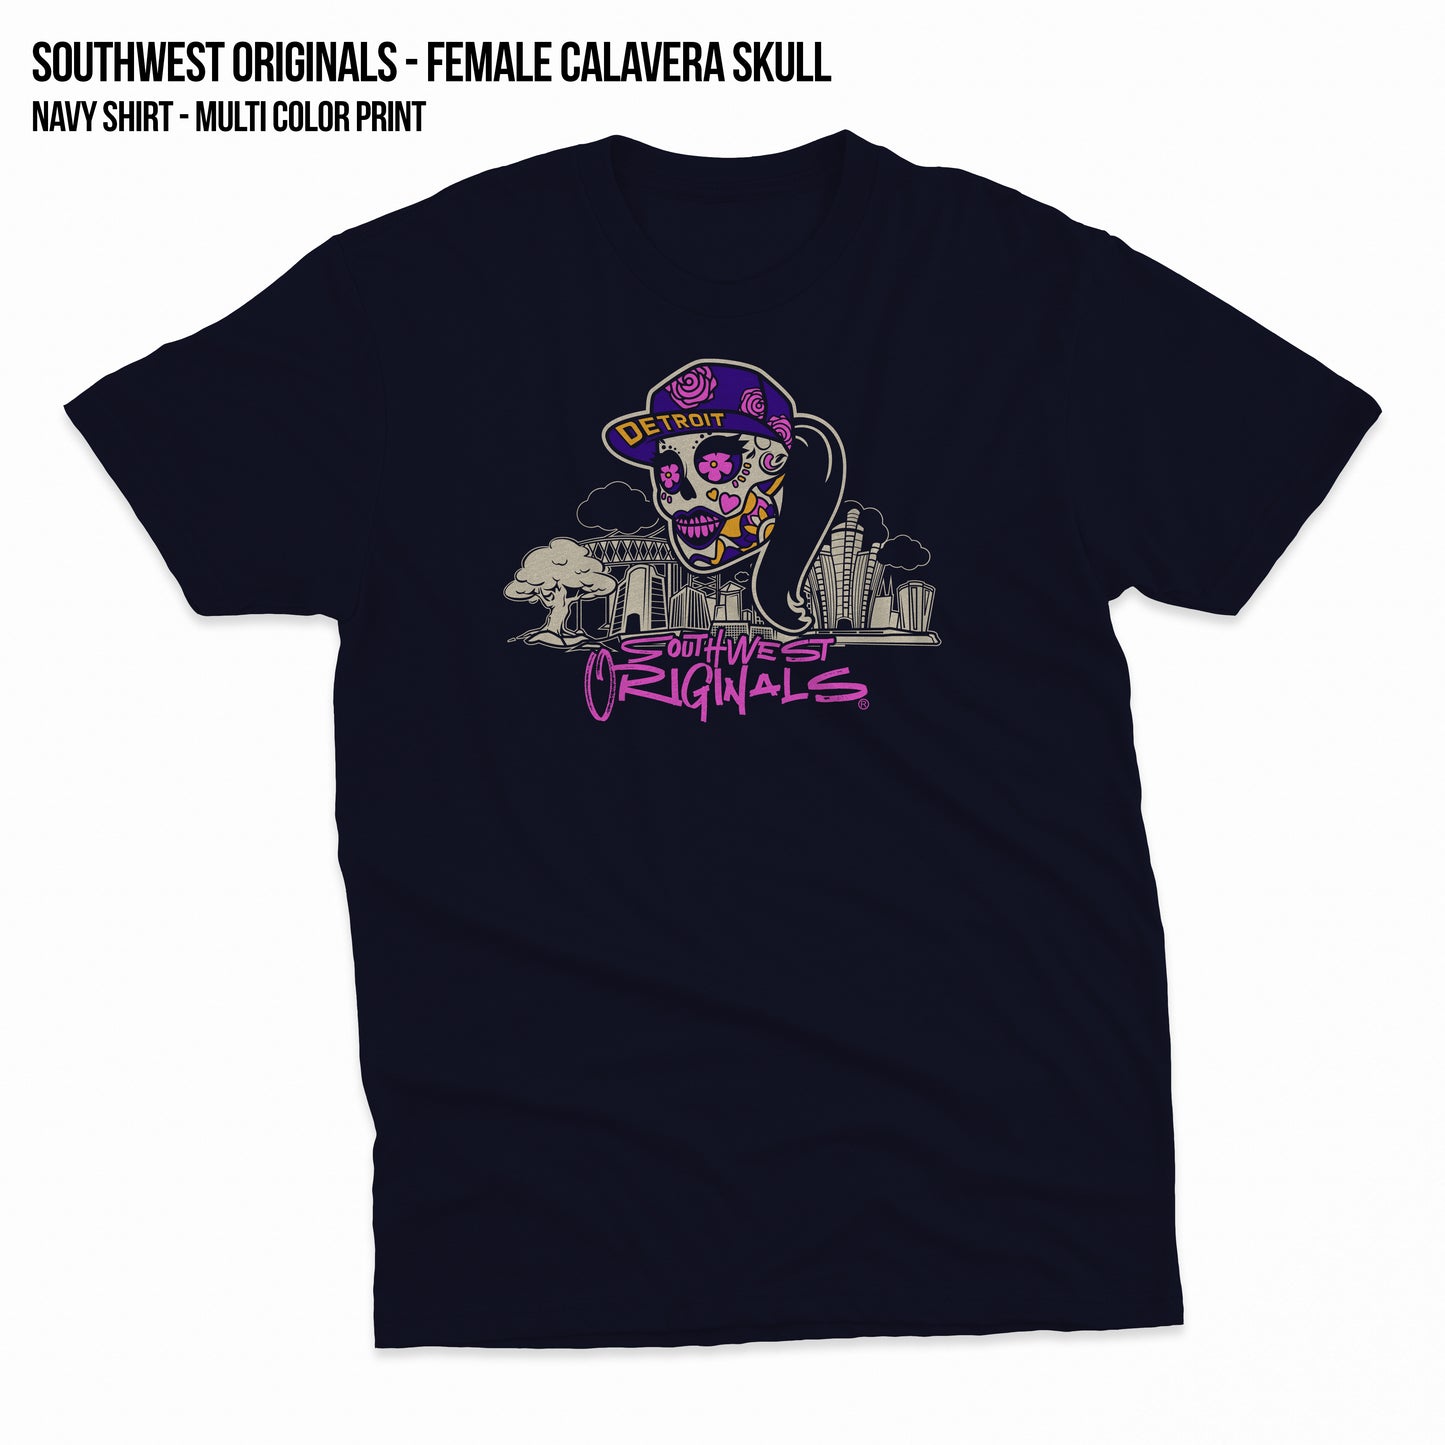 The Official Southwest Originals Female sugar skull "Navy Shirt"